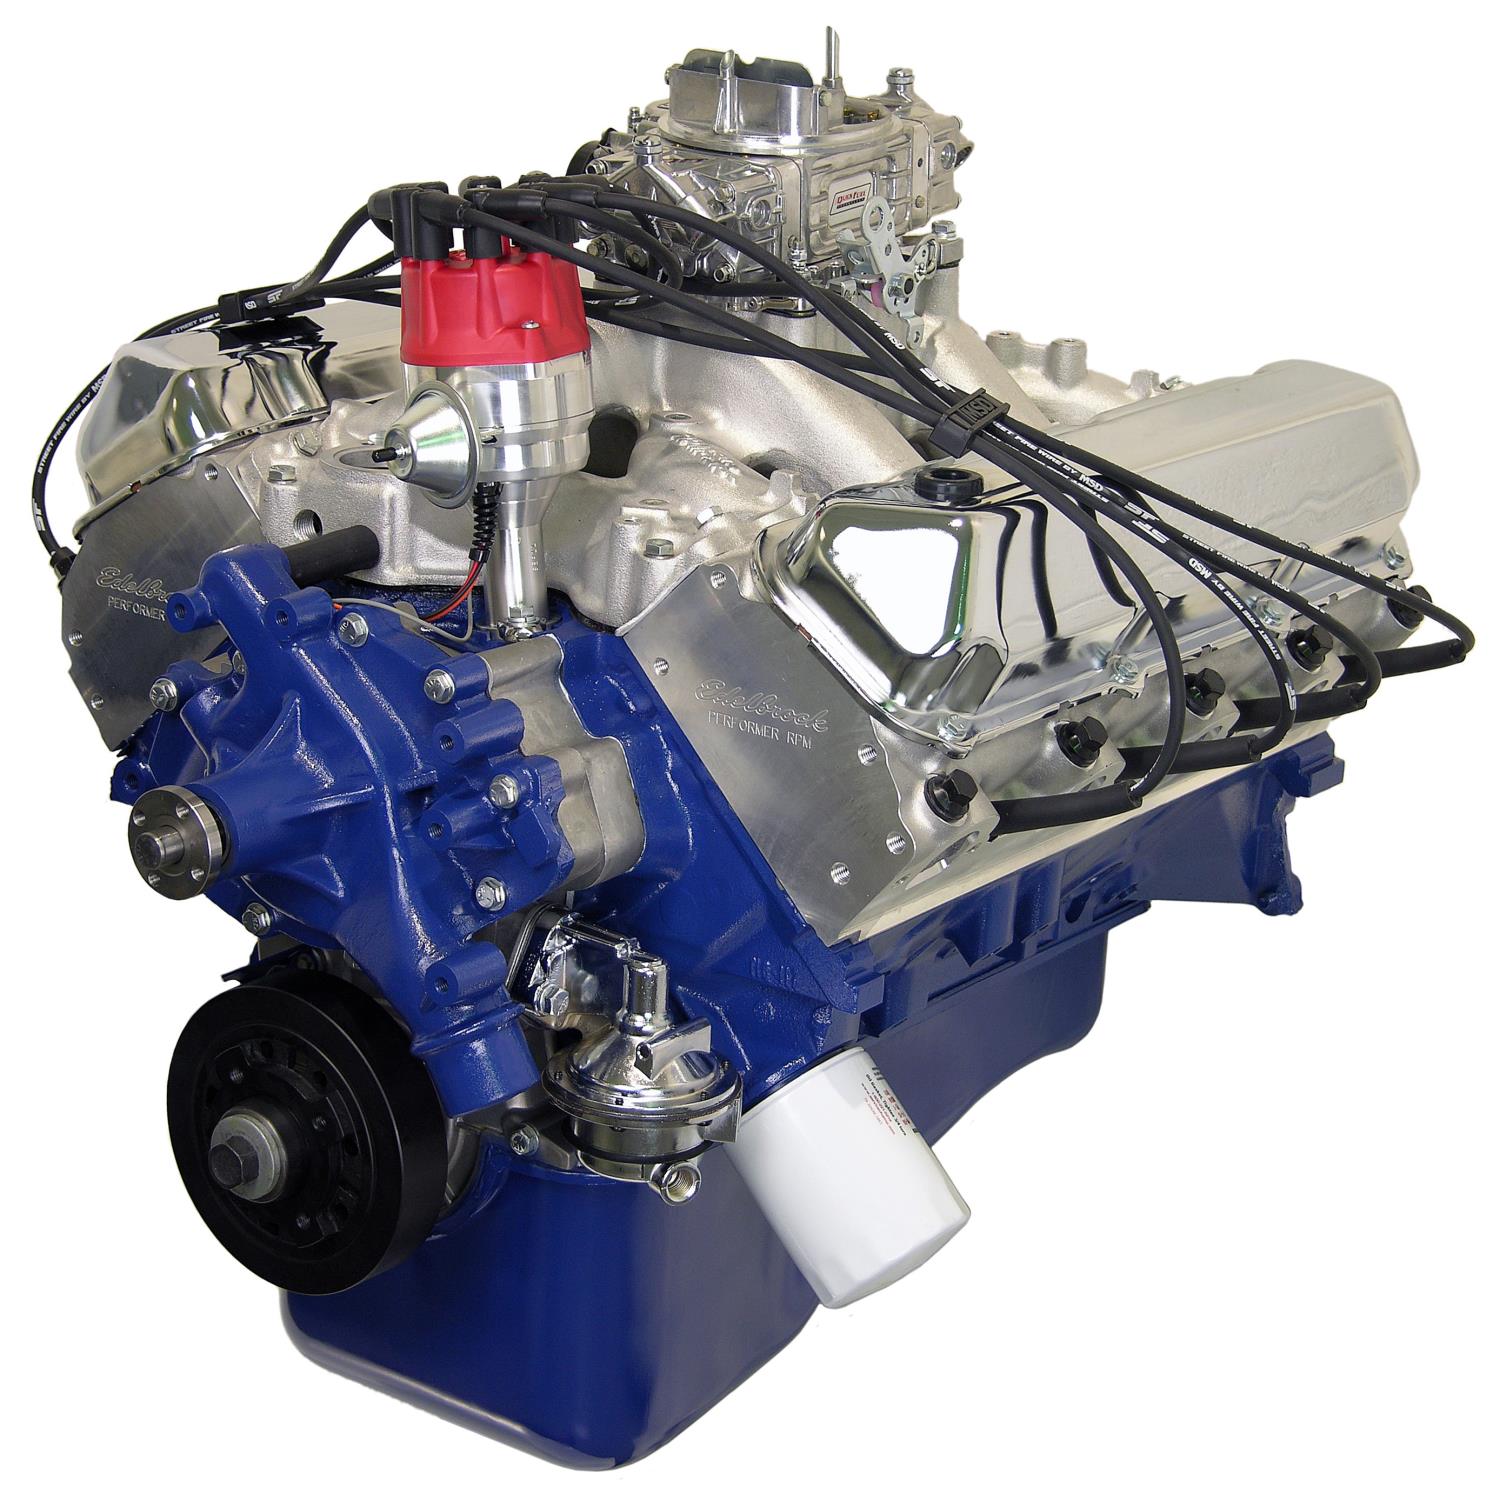 HP19C High-Performance Crate Engine Big Block Ford 502ci / 545HP / 595TQ